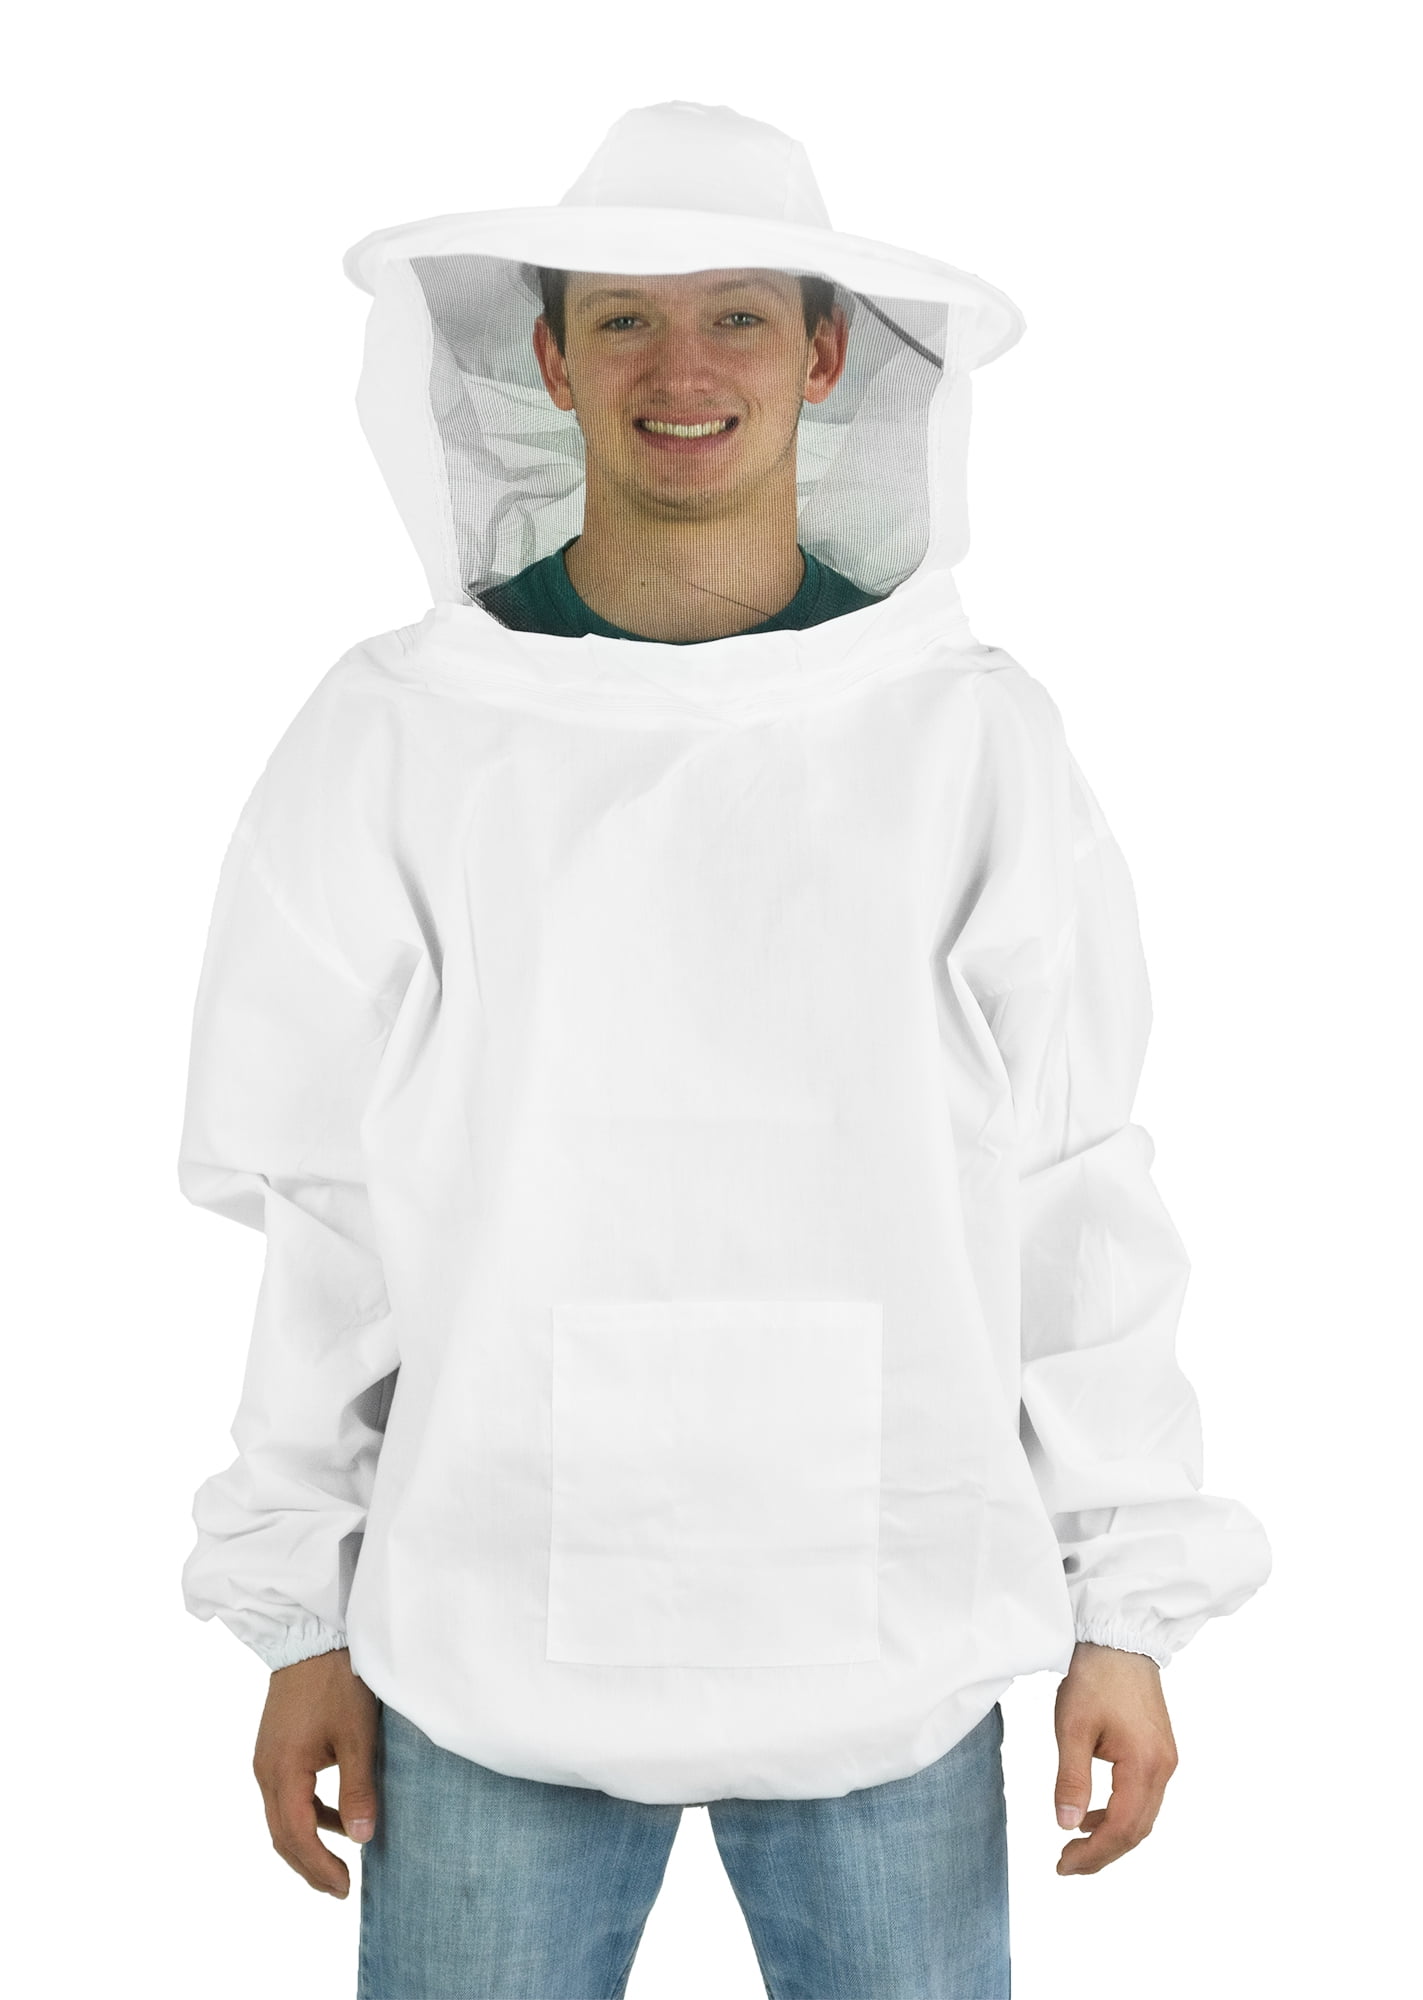 Bee Beekeeping Jacket Veil Bee Keeping Suit Hat Smock Protective Equipment Blue 420011785725 